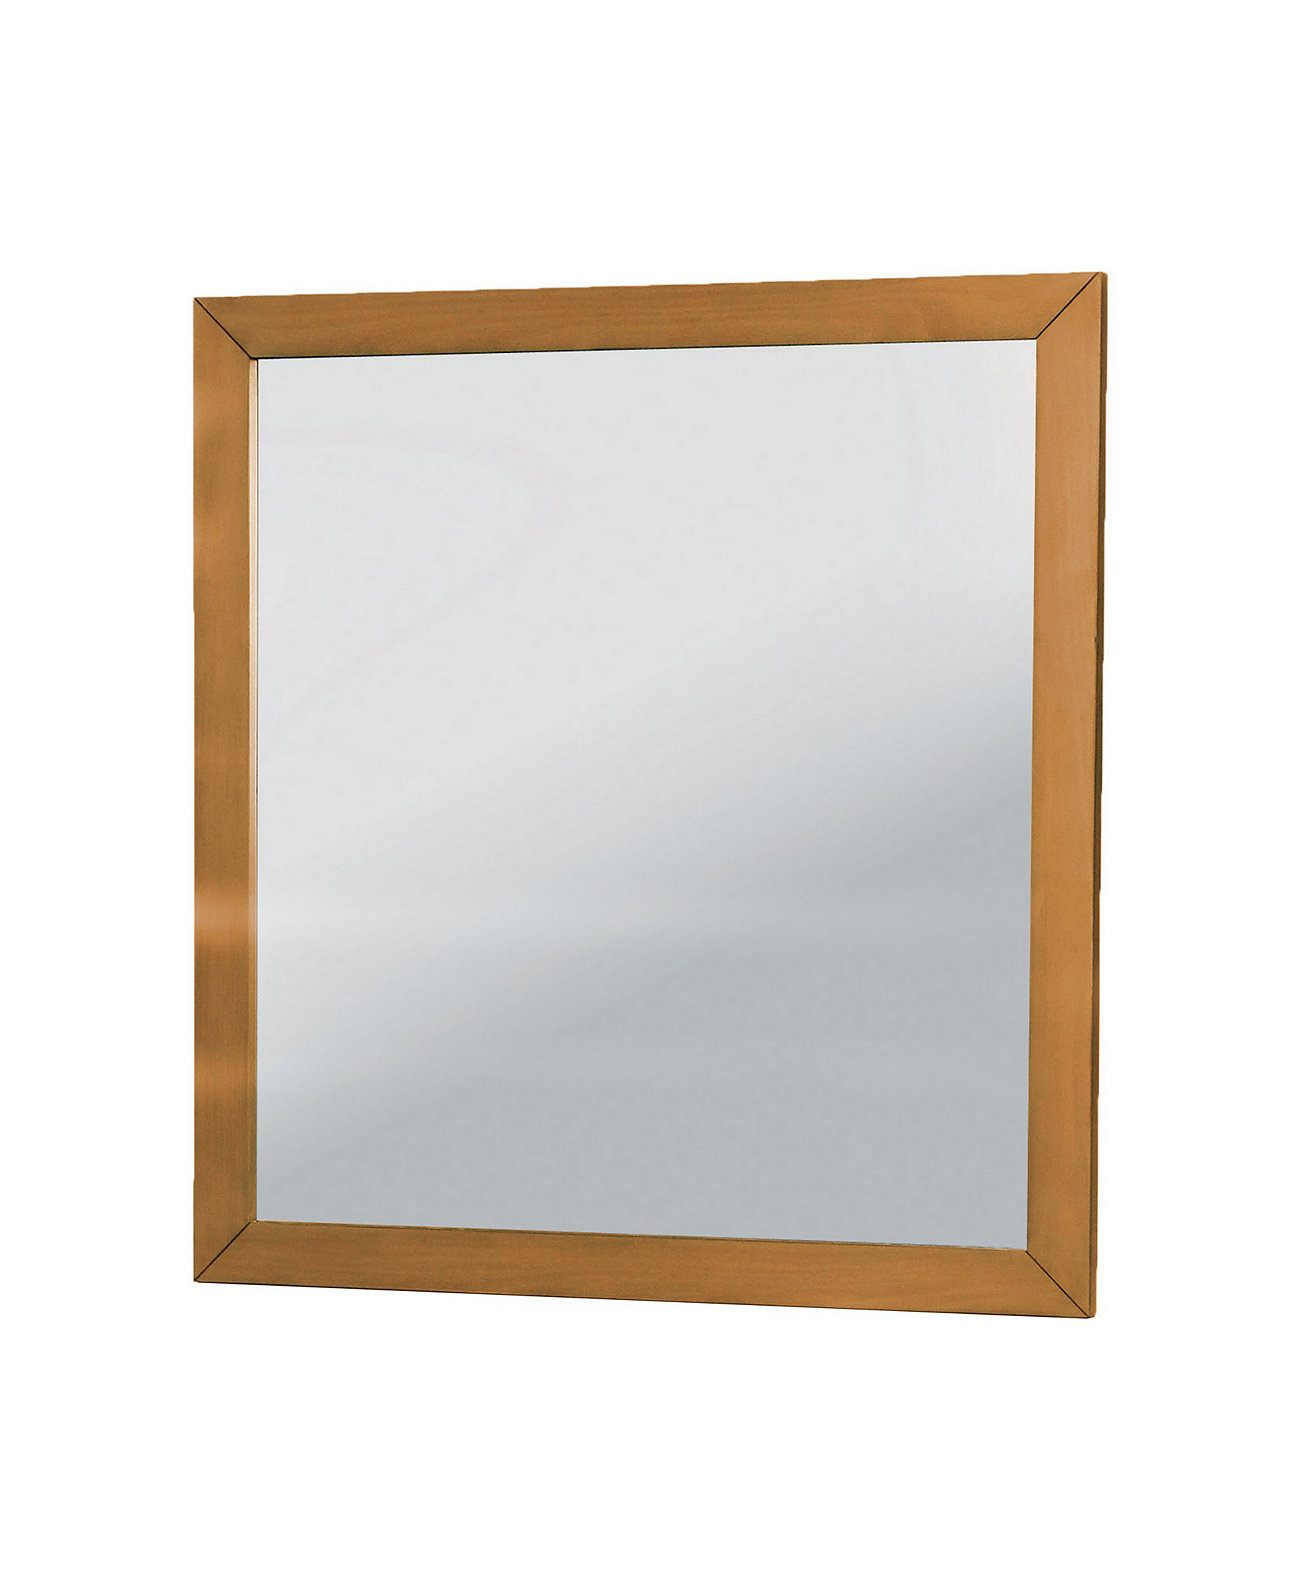 Румика мебель зеркала. Зеркало это мебель или нет. Фотография зеркала для маркетплейсов. Modern Wood frame Italian Wall Mirrors.